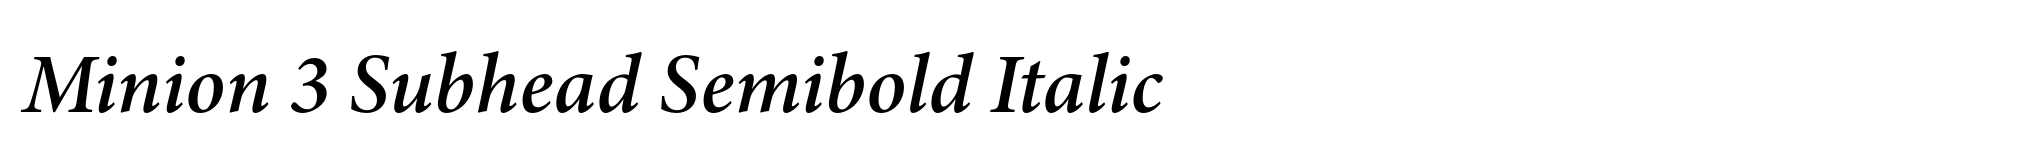 Minion 3 Subhead Semibold Italic image